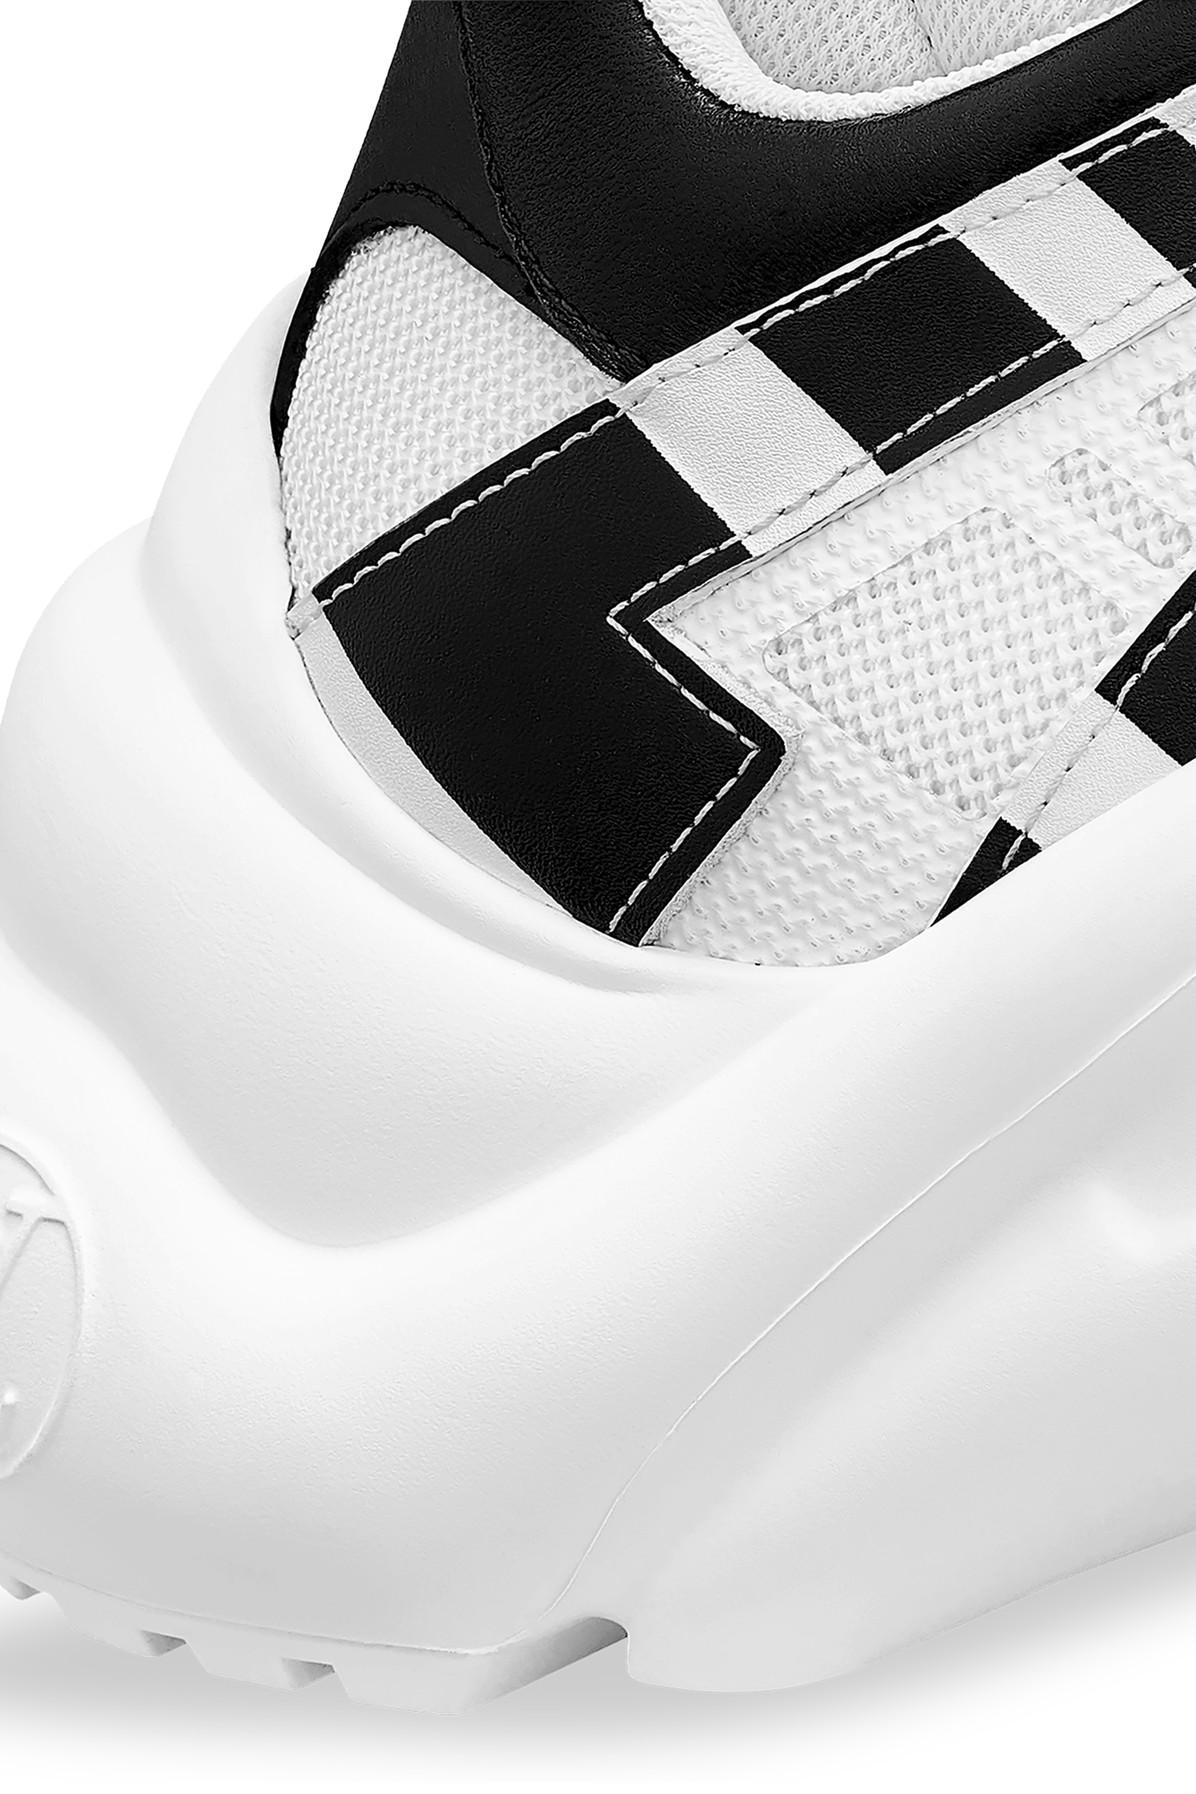 Louis Vuitton 1ABHO1 LV Archlight Sneaker